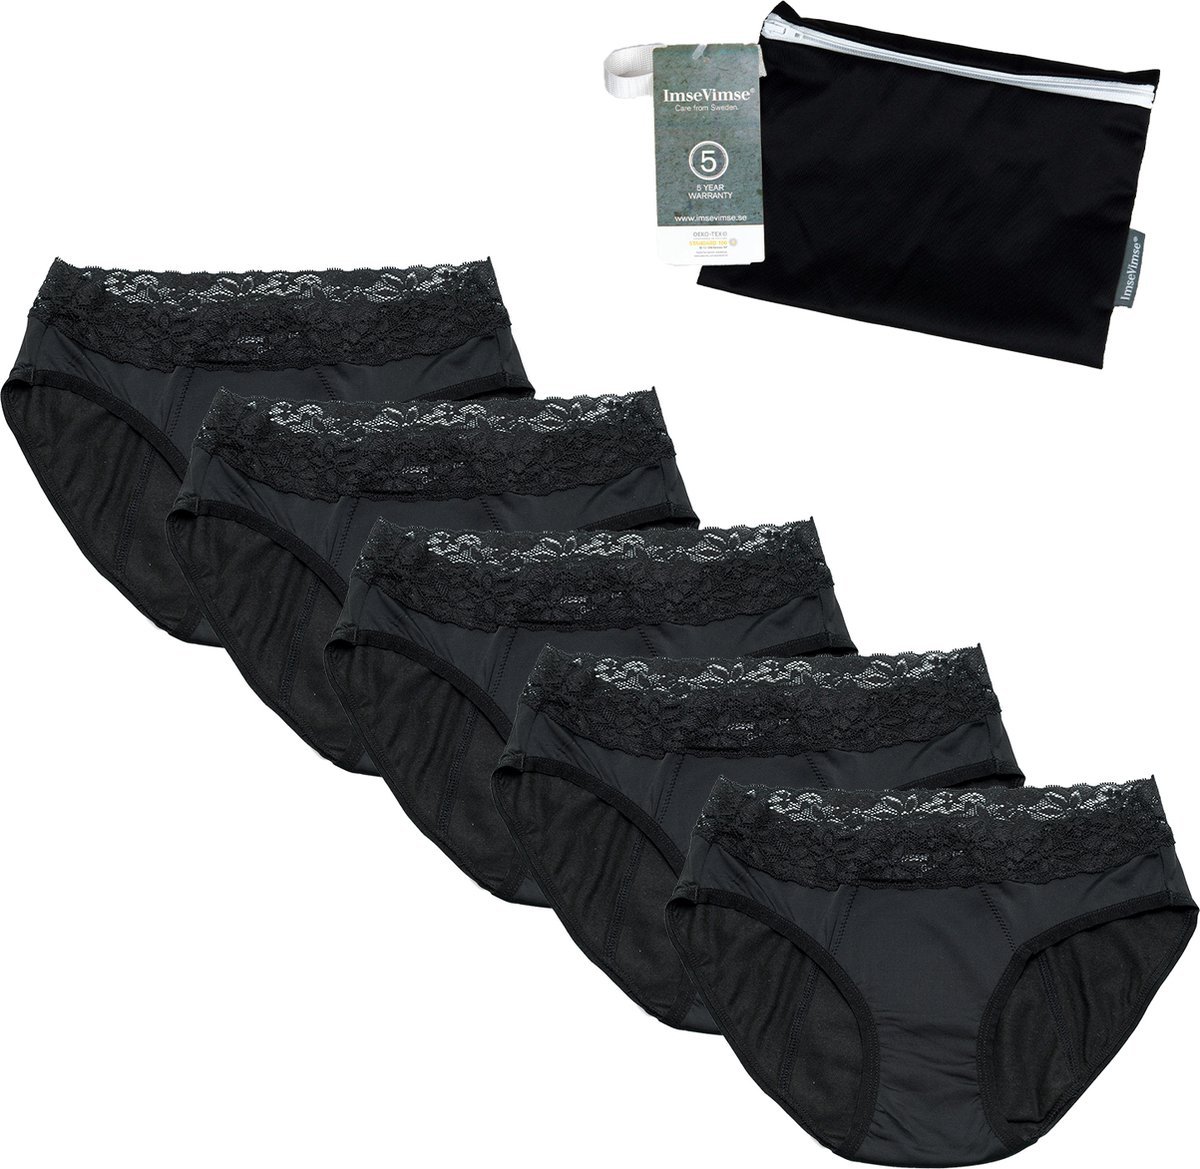 Cheeky Pants Feeling Pretty - Menstruatie ondergoed Set van 5 + Wetbag - Maat 32-34 - Extra absorptie - Comfortabel menstruatieondergoed - Zero waste menstruatieoplossing